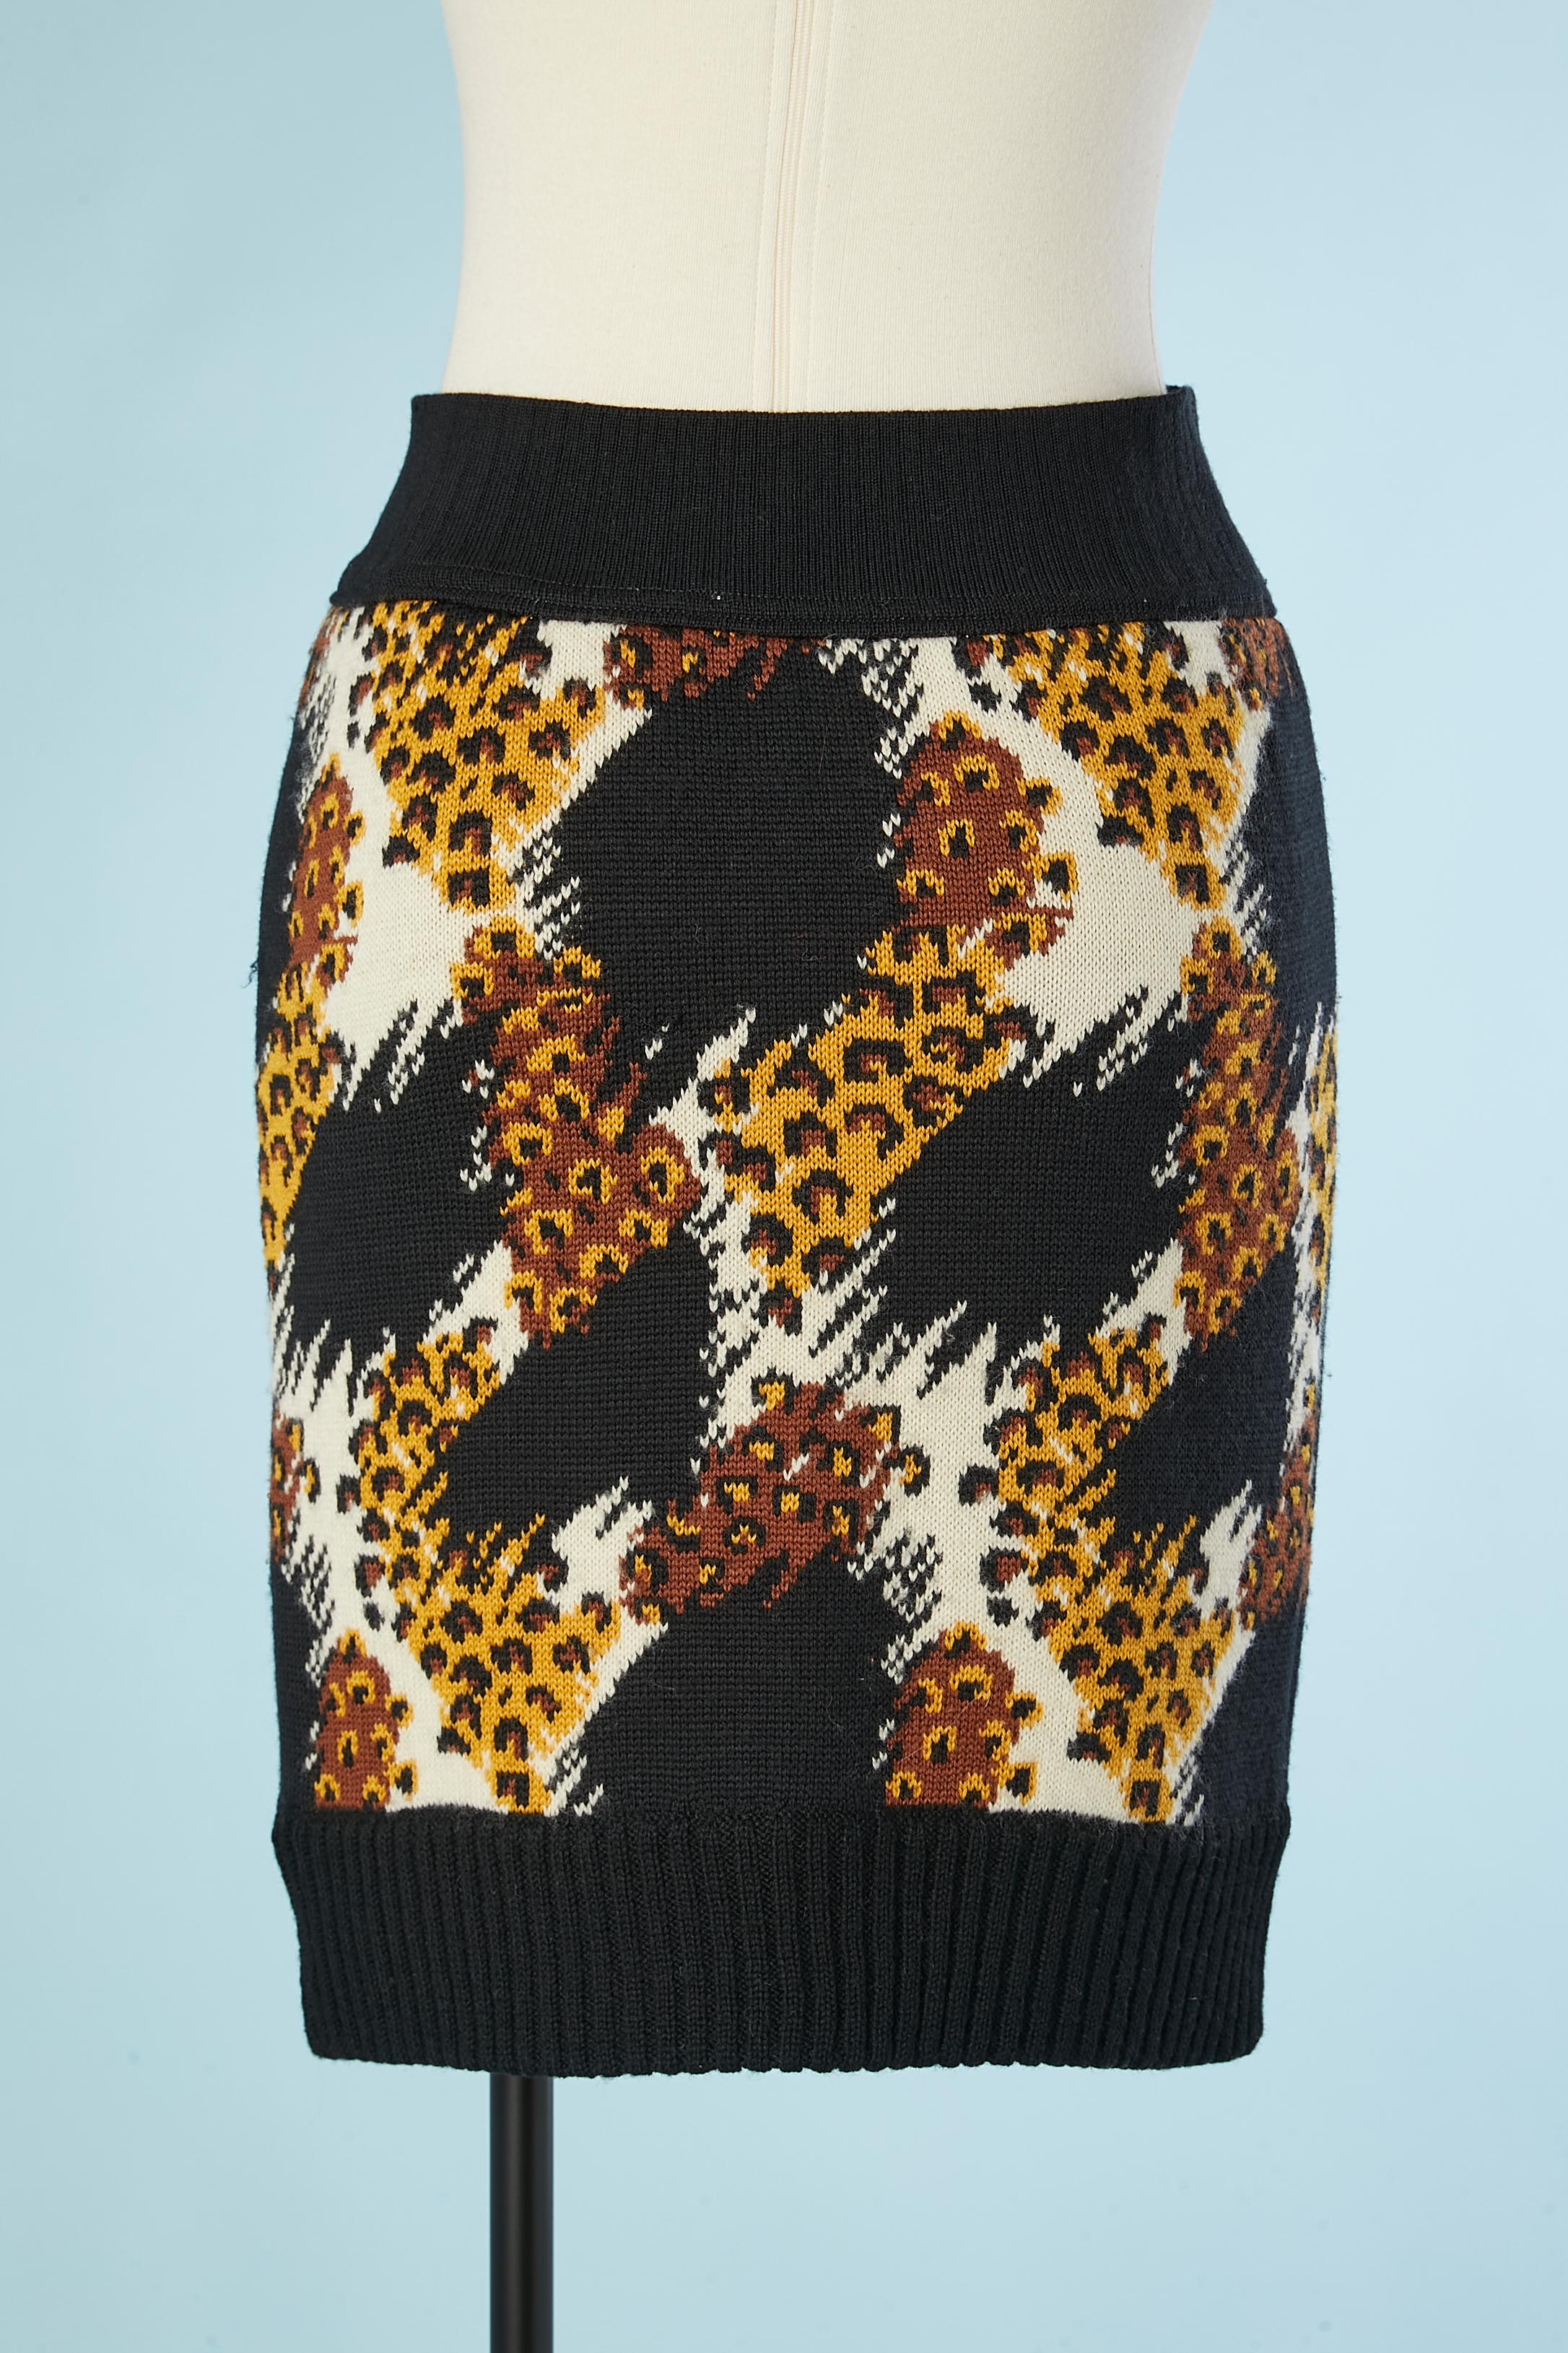 Knit jacquard skirt with animal pattern.
SIZE 36 (Fr) 6 (Us) S 
 